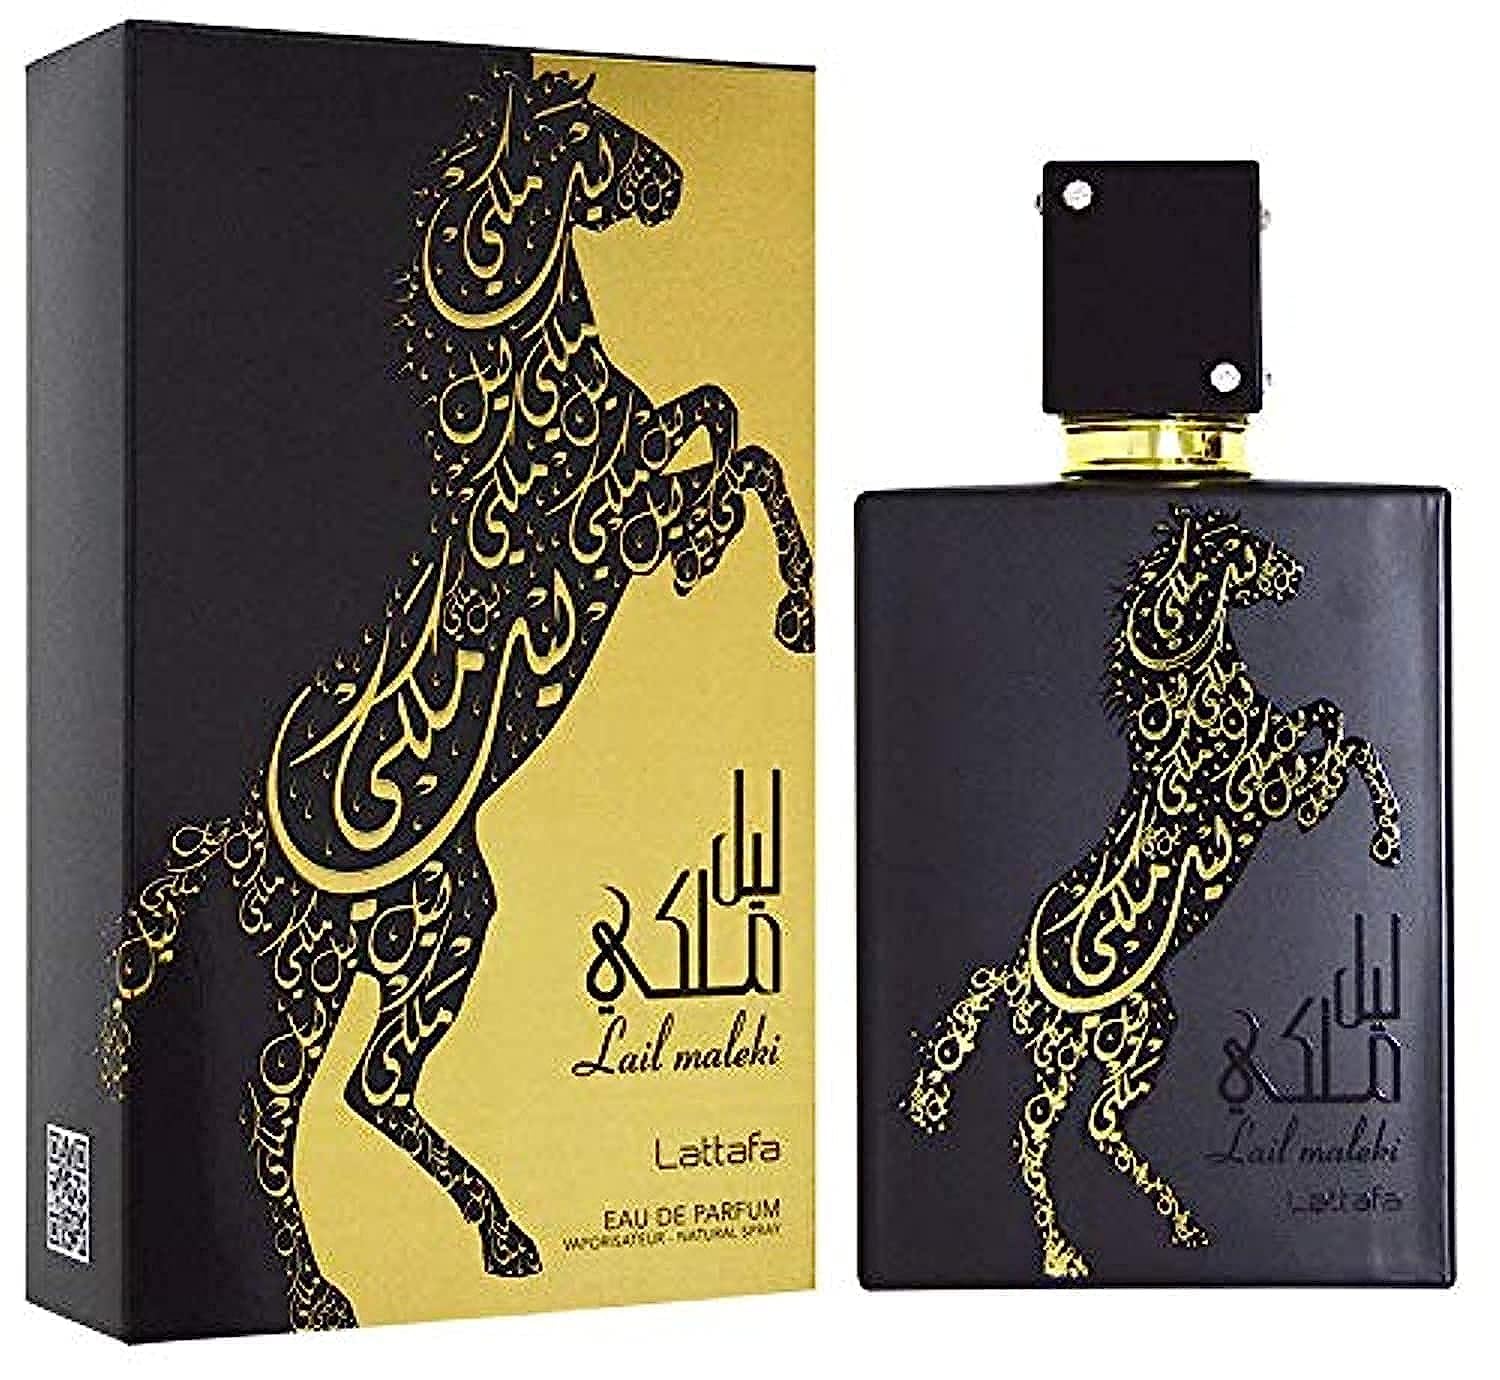 Lail Maleki EDP (100ml) spray perfume by Lattafa